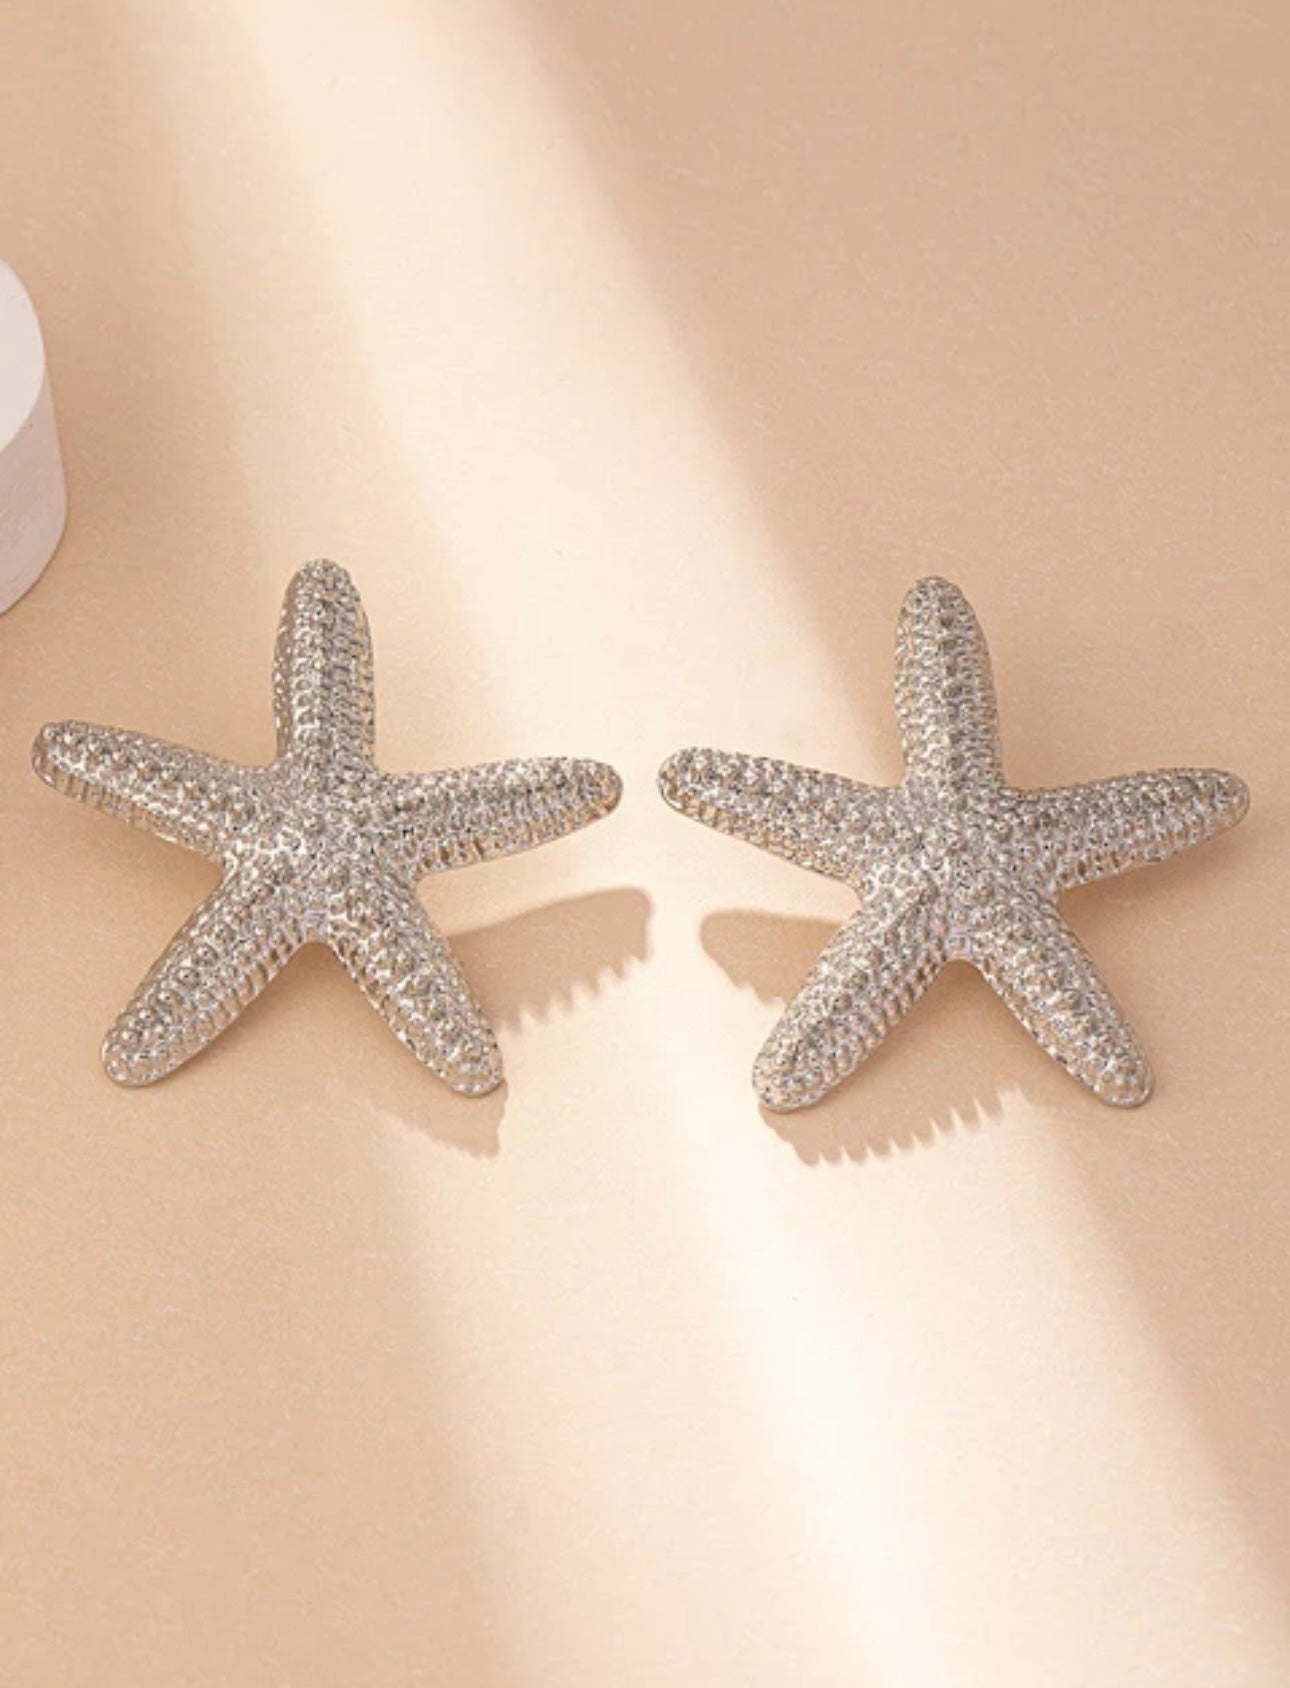 Star Fish Earrings - Patrice Designs